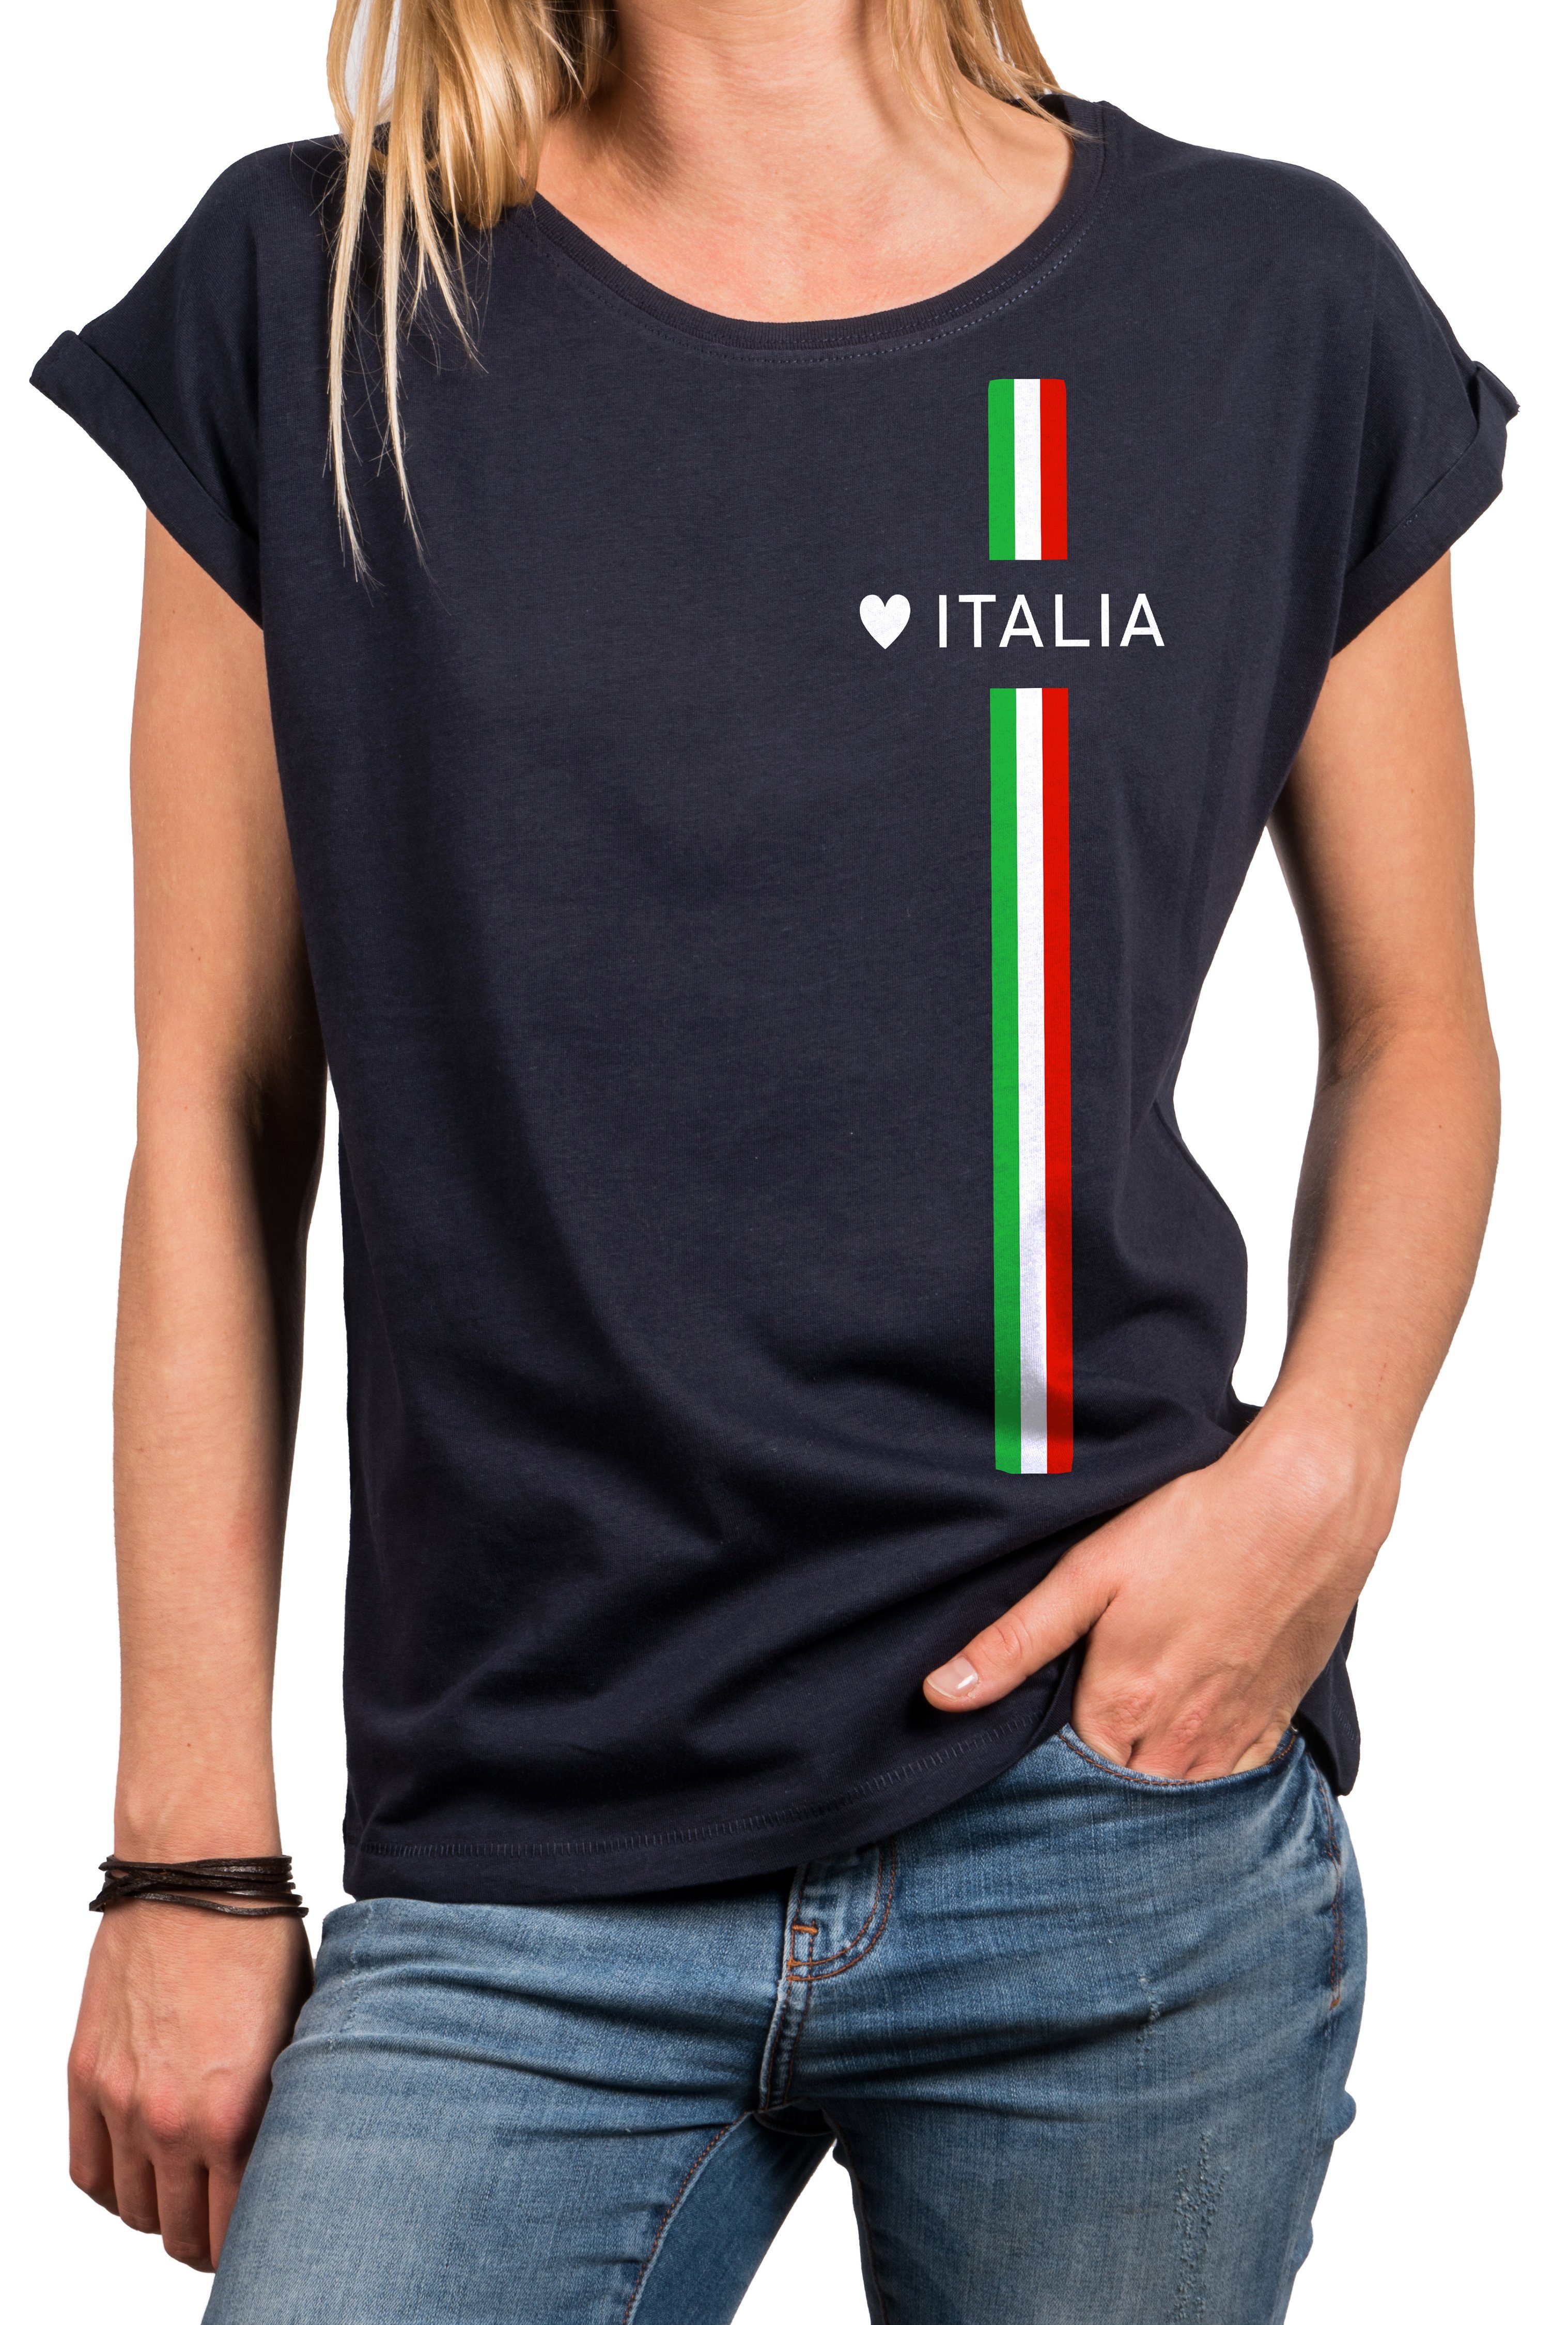 Blau Top Mode Italien Herz Italia Italienische Kurzarmshirt, Style mit Print-Shirt MAKAYA Italiano Druck Trikot Damen